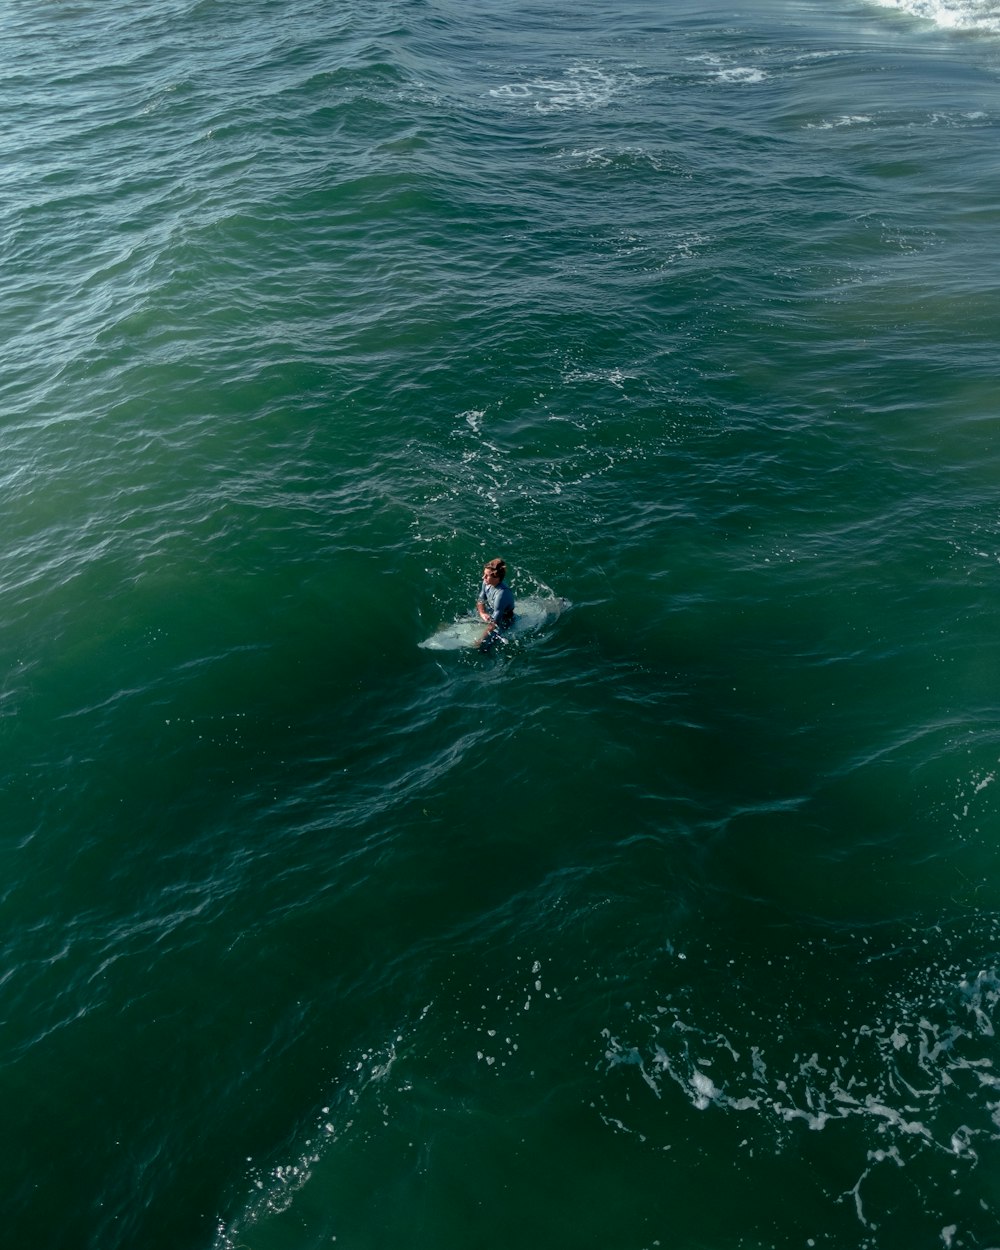 perspn on surf board